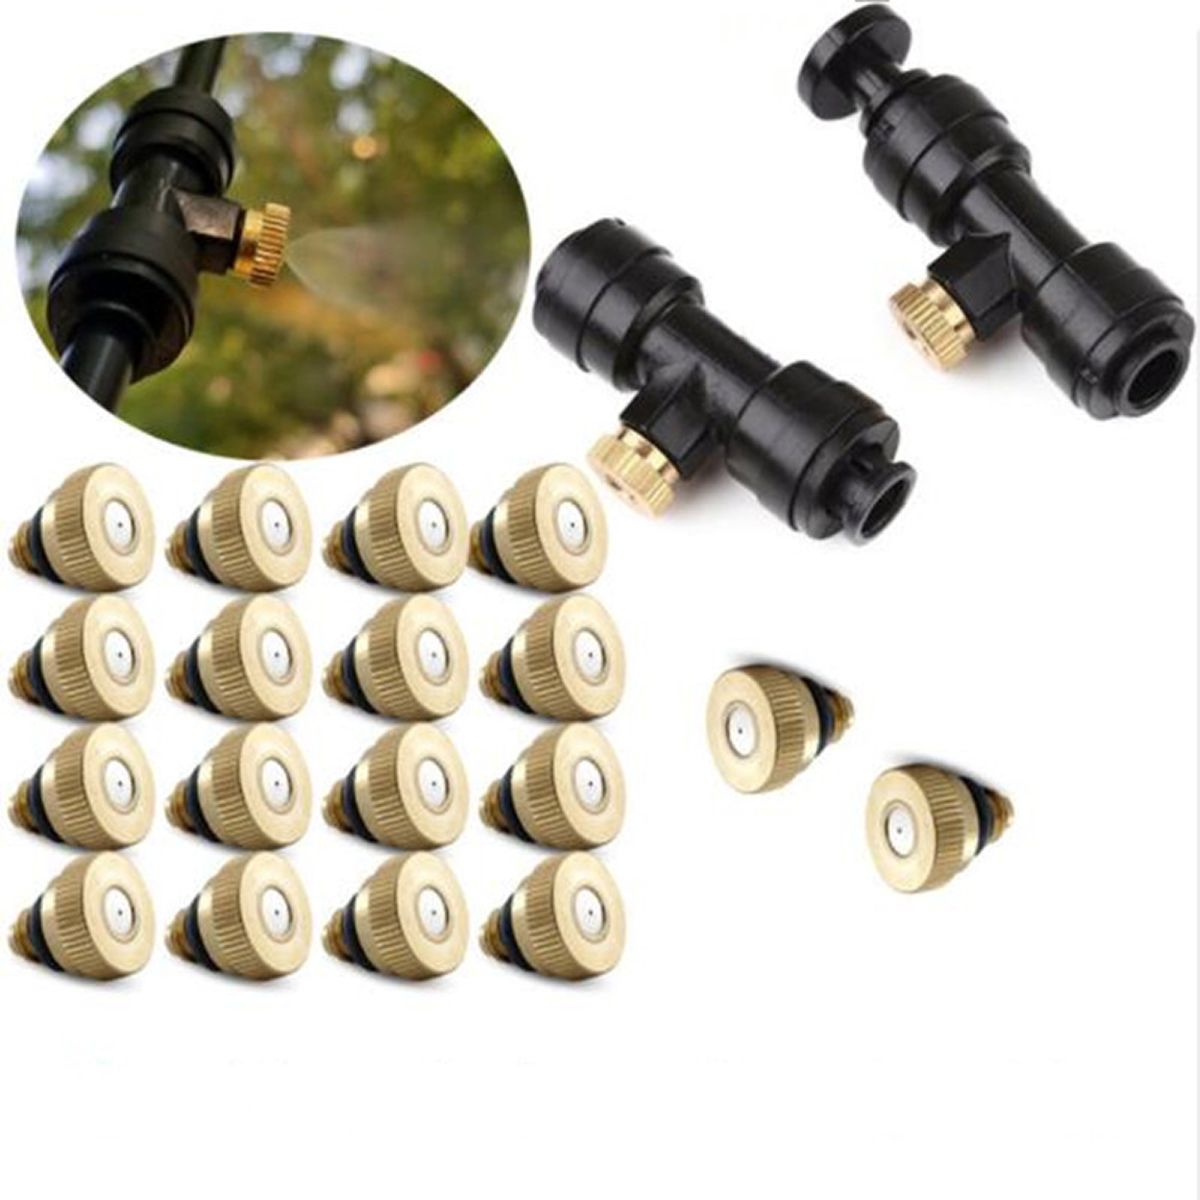 14quot-Brass-Low-Pressure-Misting-Nozzle-Quick-Plug-Socket-Plug-Spray-Set-Outdoor-Garden-Water-Spray-1531384